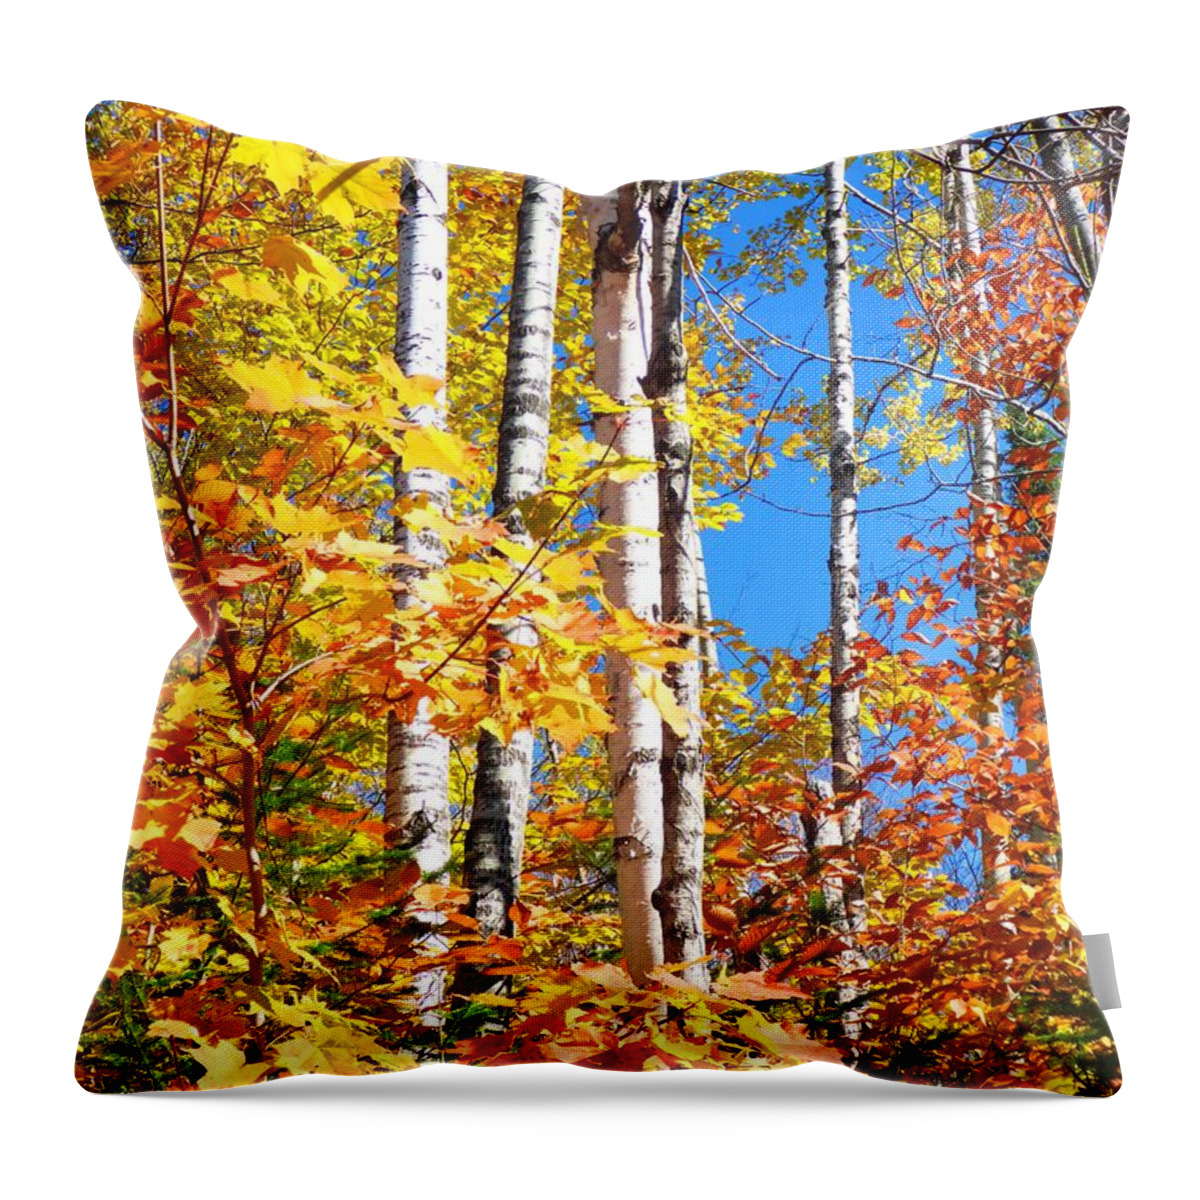 Autumn Throw Pillow featuring the photograph Gold Autumn by Cristina Stefan